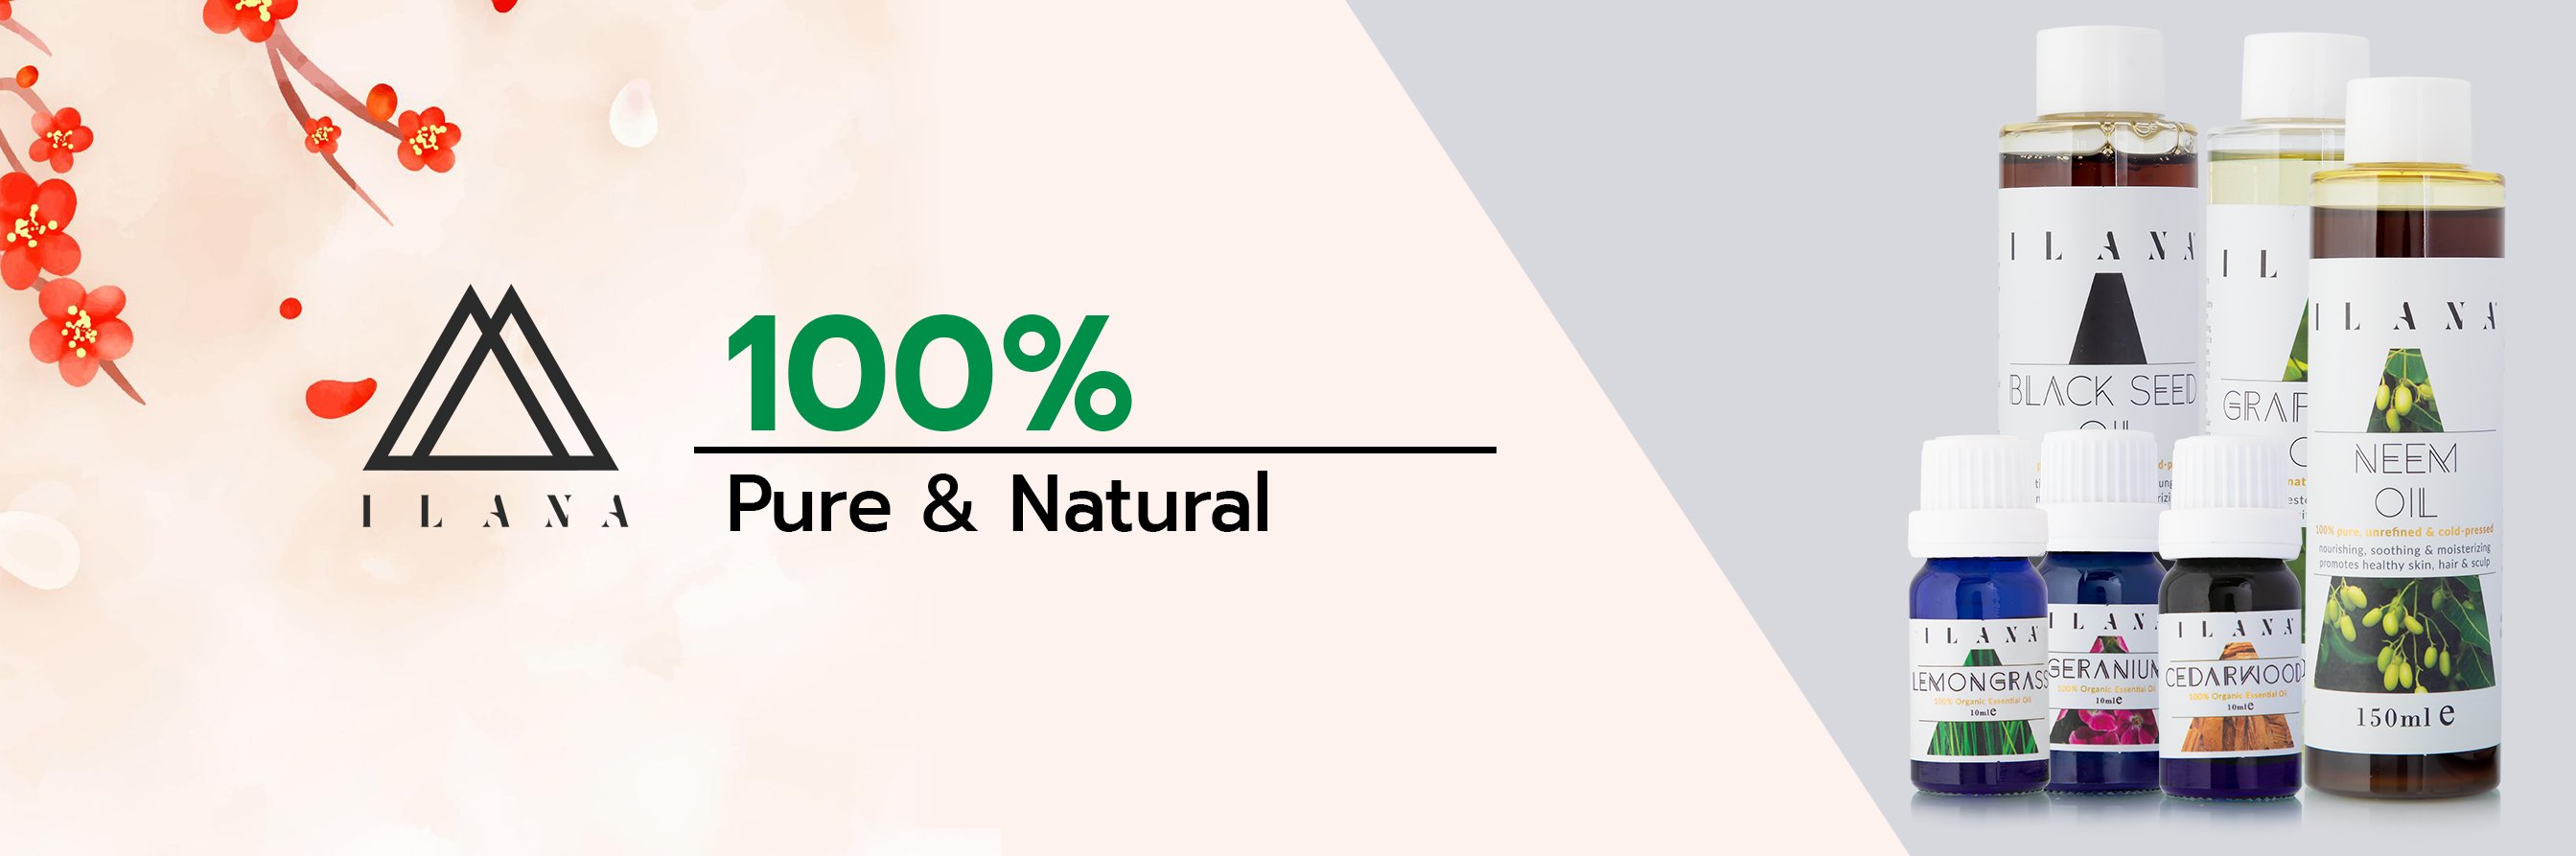 Ilana 100% Organic Essential Oil Lemongrass